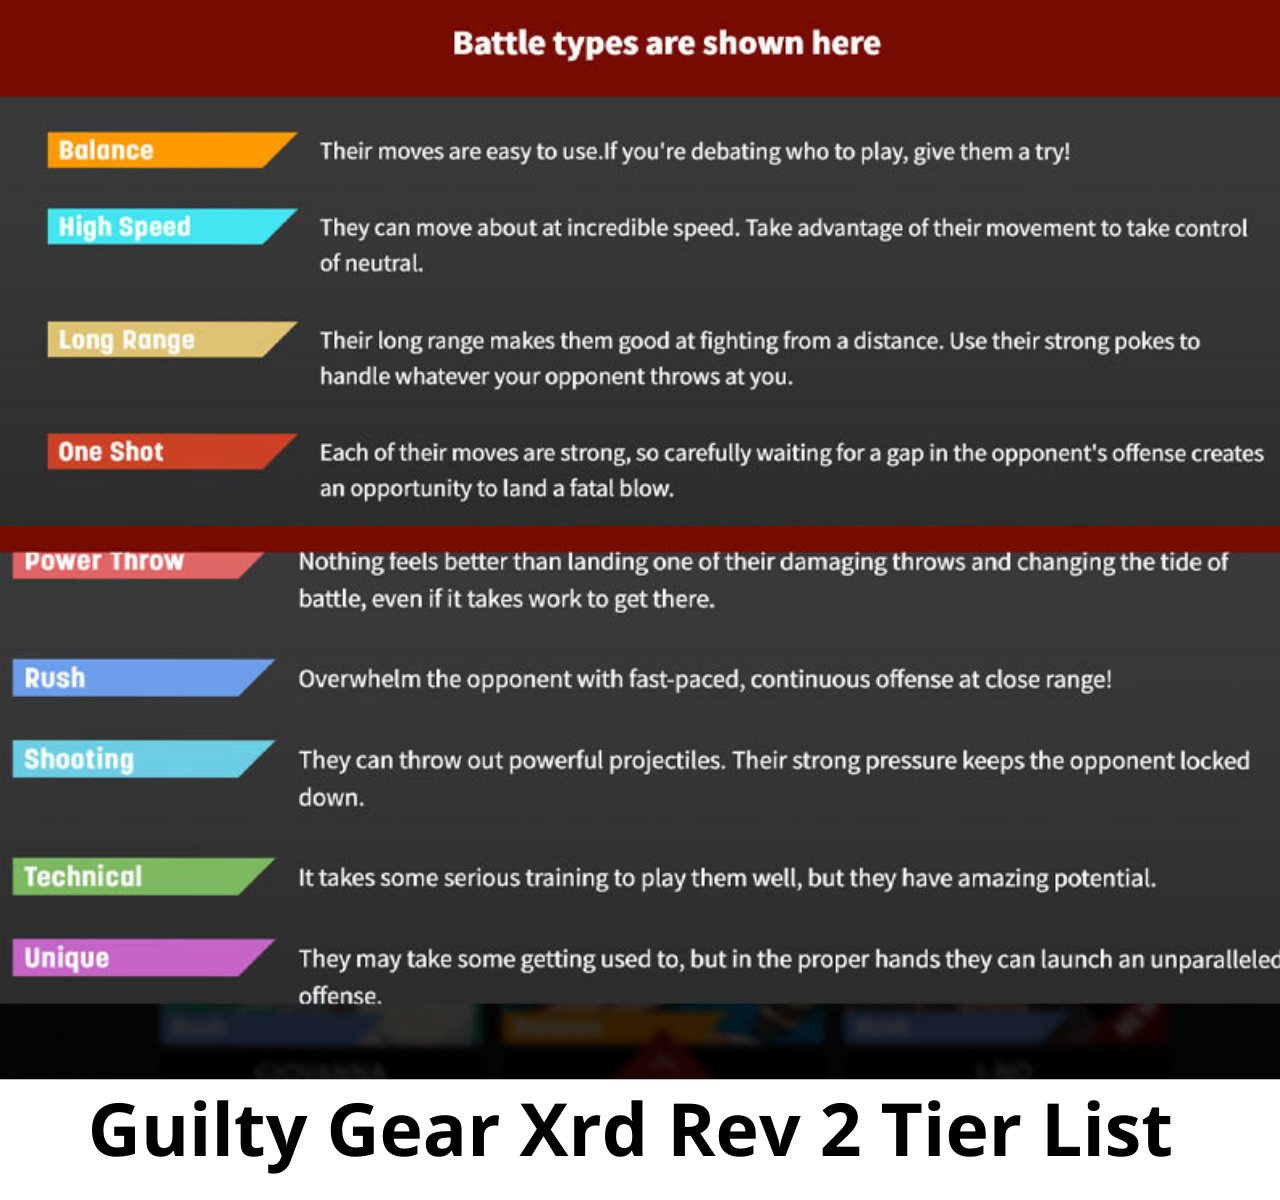 Guilty Gear Xrd Rev 2 Tier List